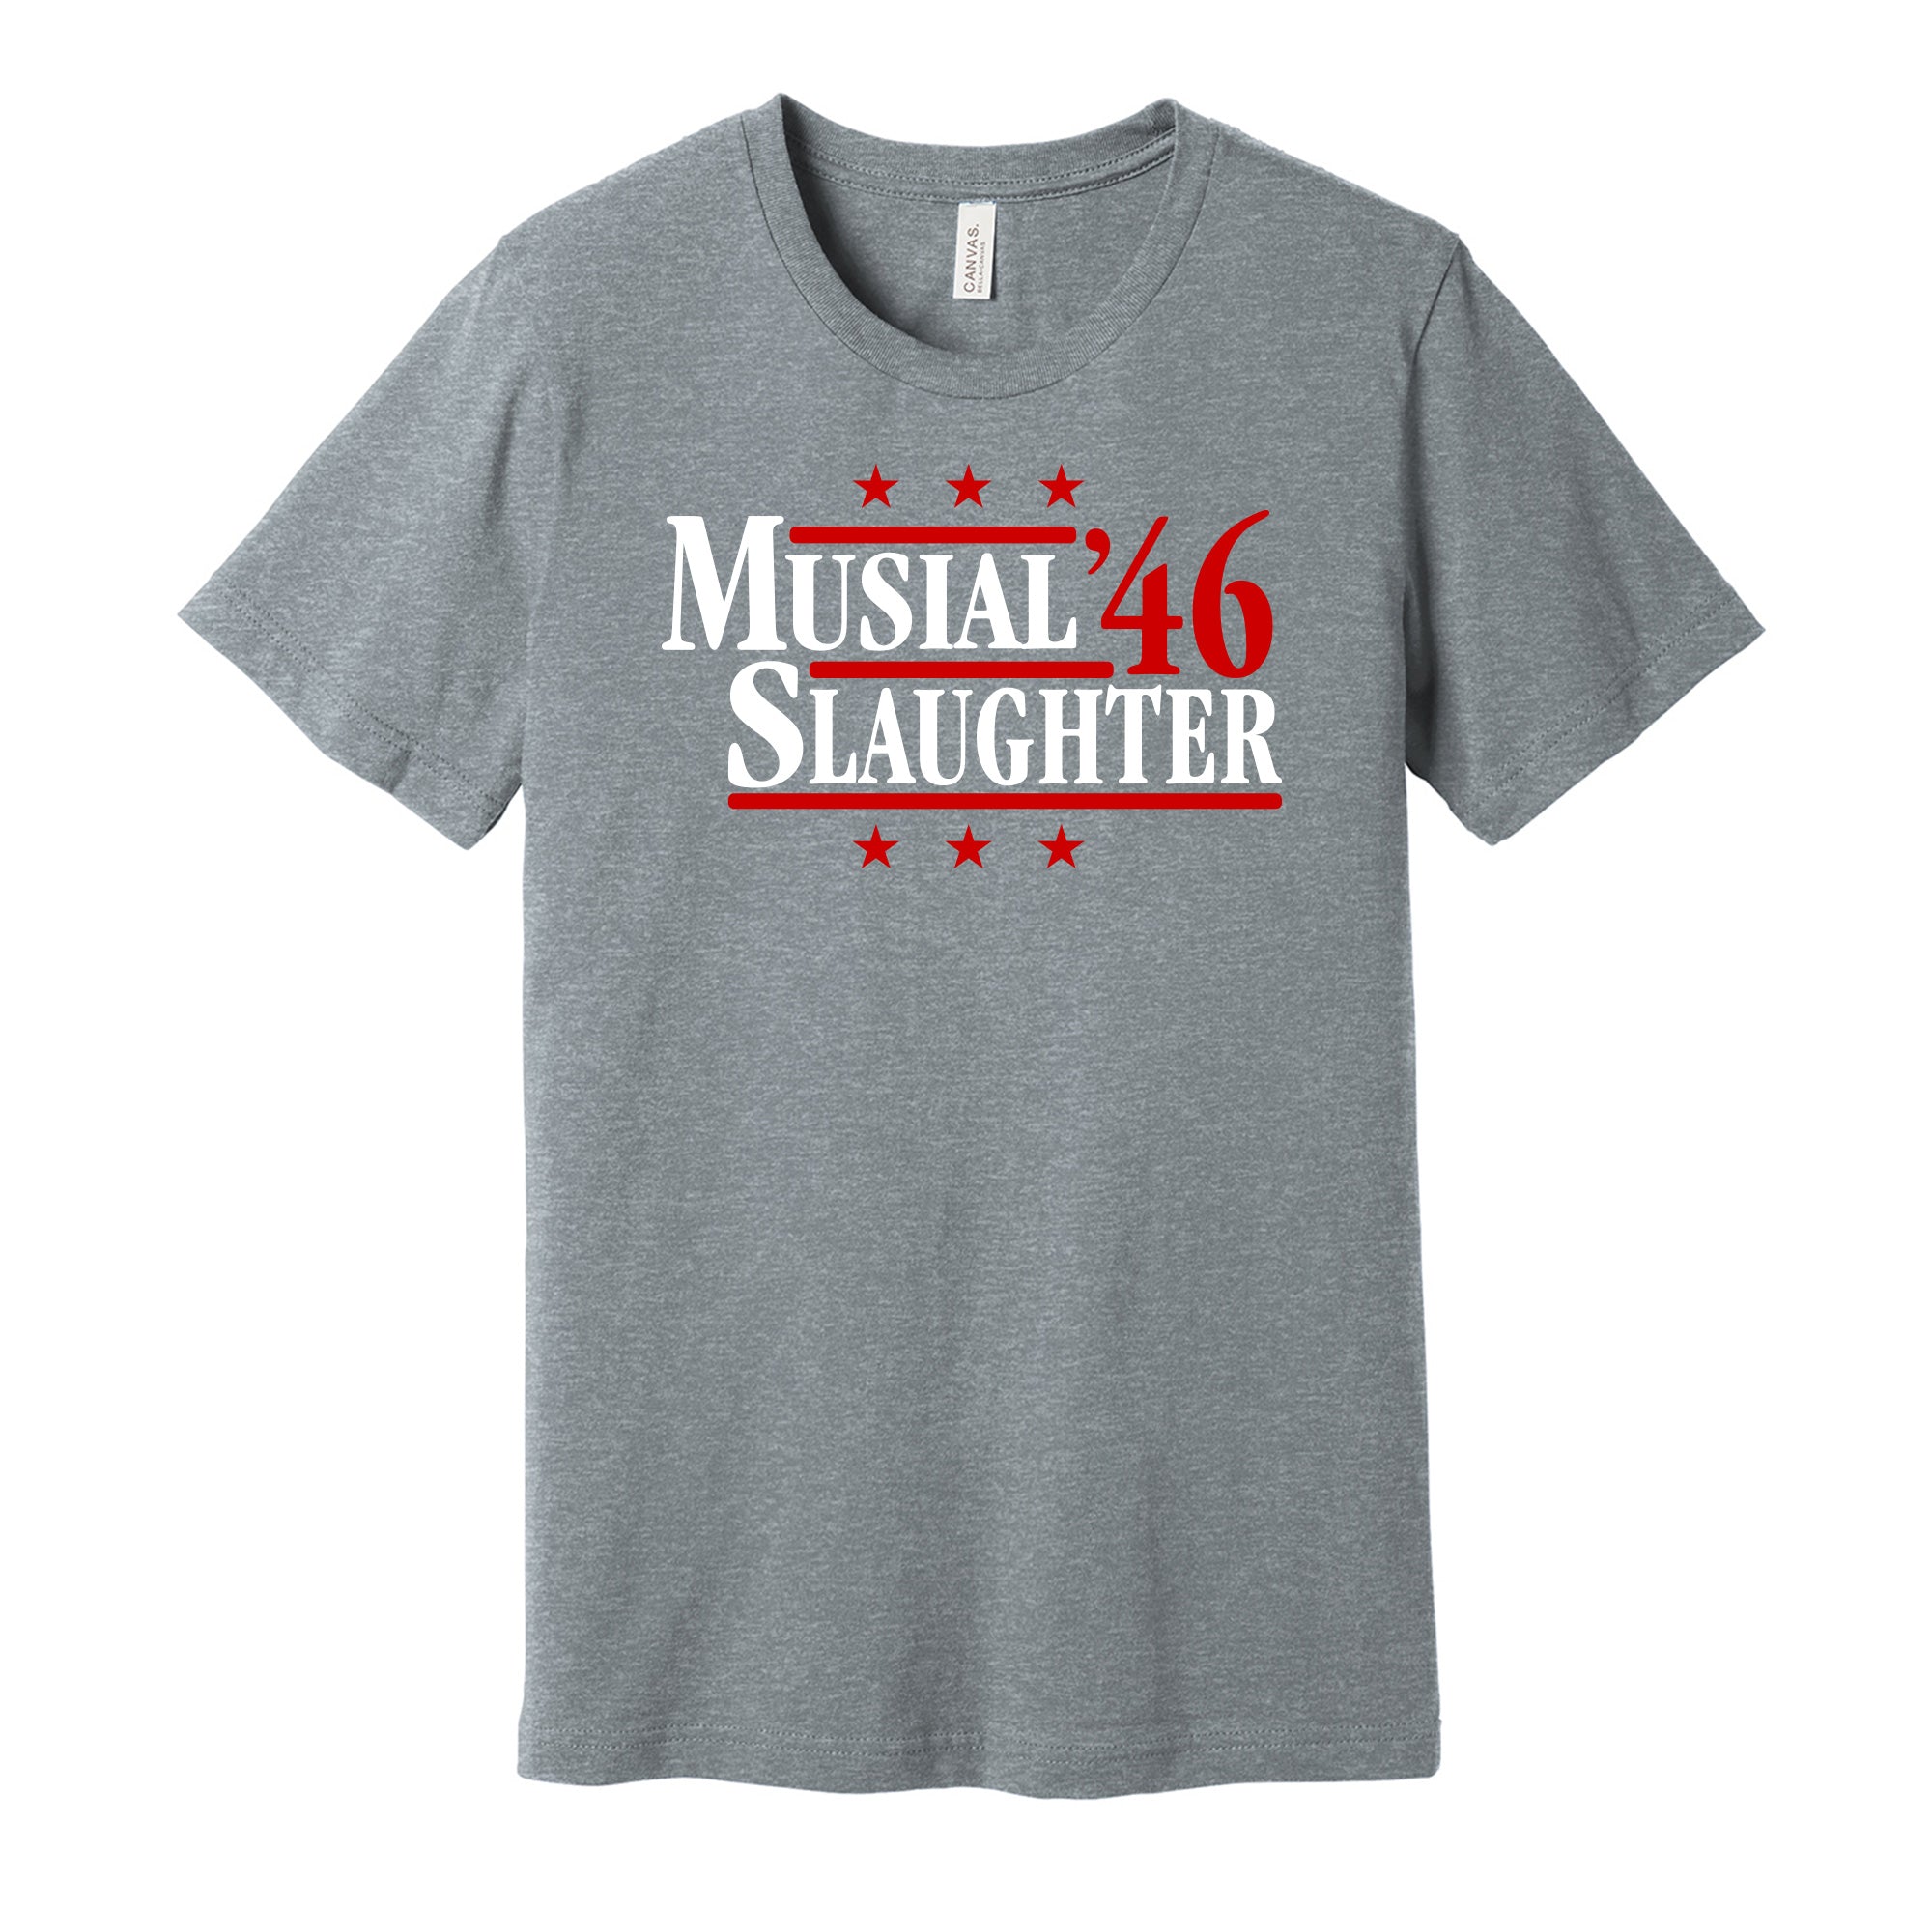 Musial & Slaughter '46 - St. Louis Baseball Legends Political Campaign Parody T-Shirt - Hyper Than Hype Shirts XL / Grey Shirt